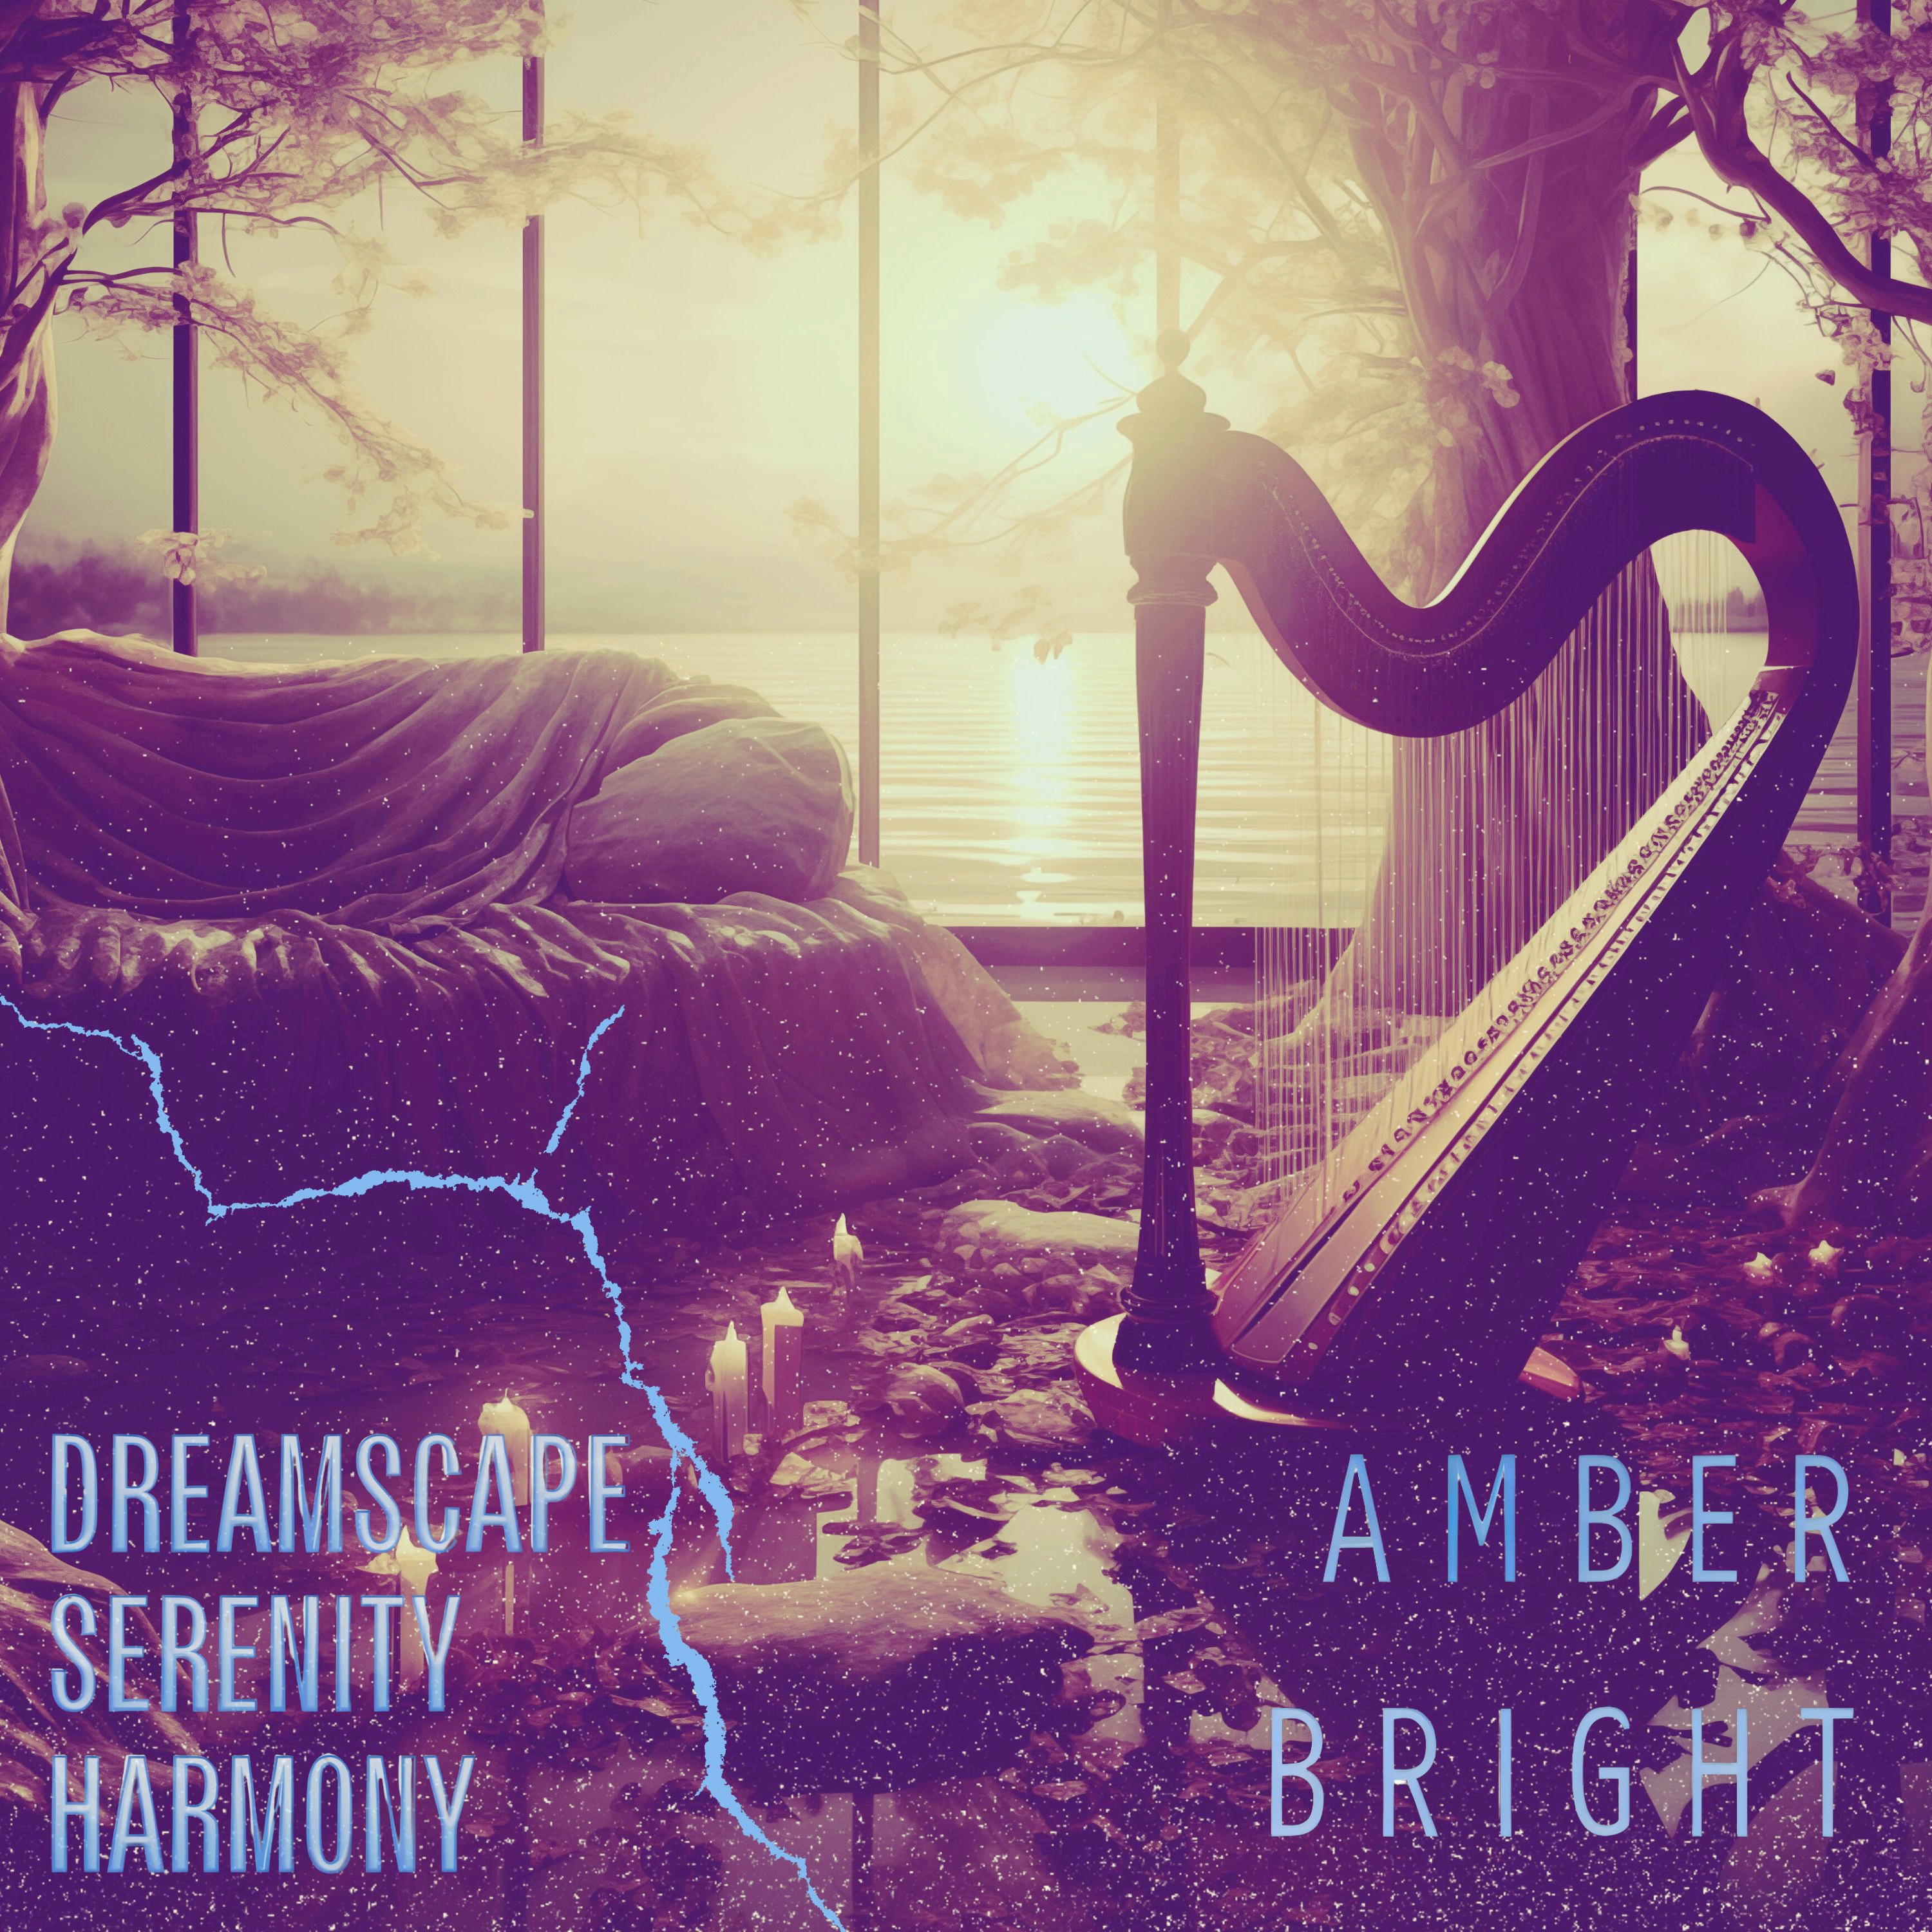 Dreamscape Serenity Harmony